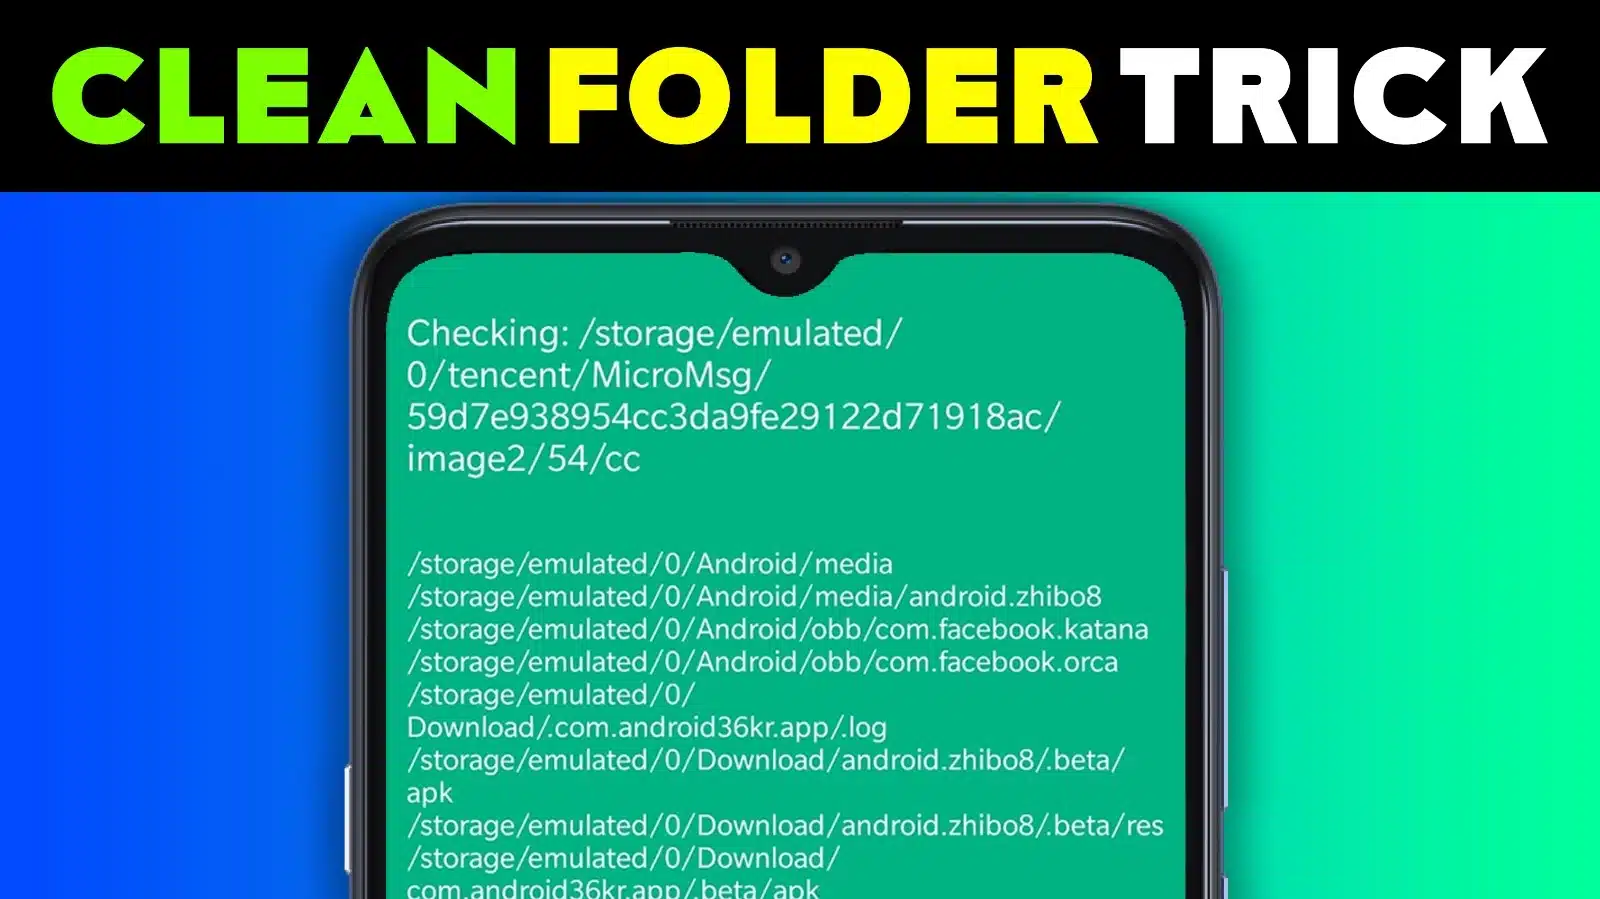 Empty Folder Cleaner Clean Folder TnShorts